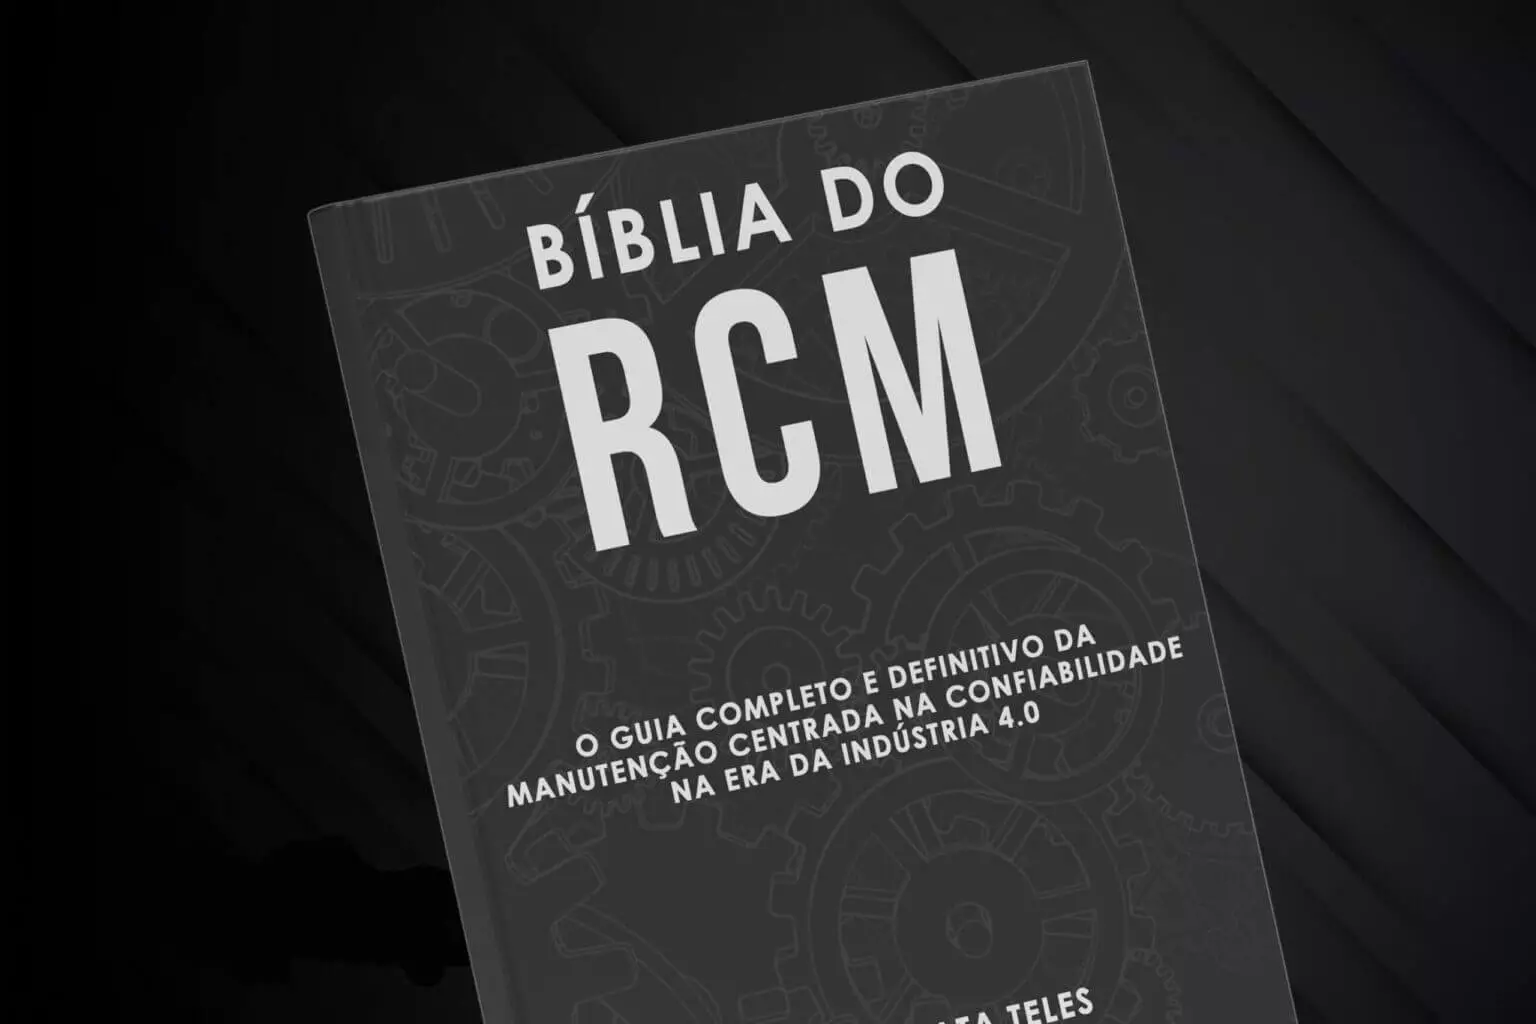 livro-rcm-mockup-1-scaled-1-1536x1024 (1)